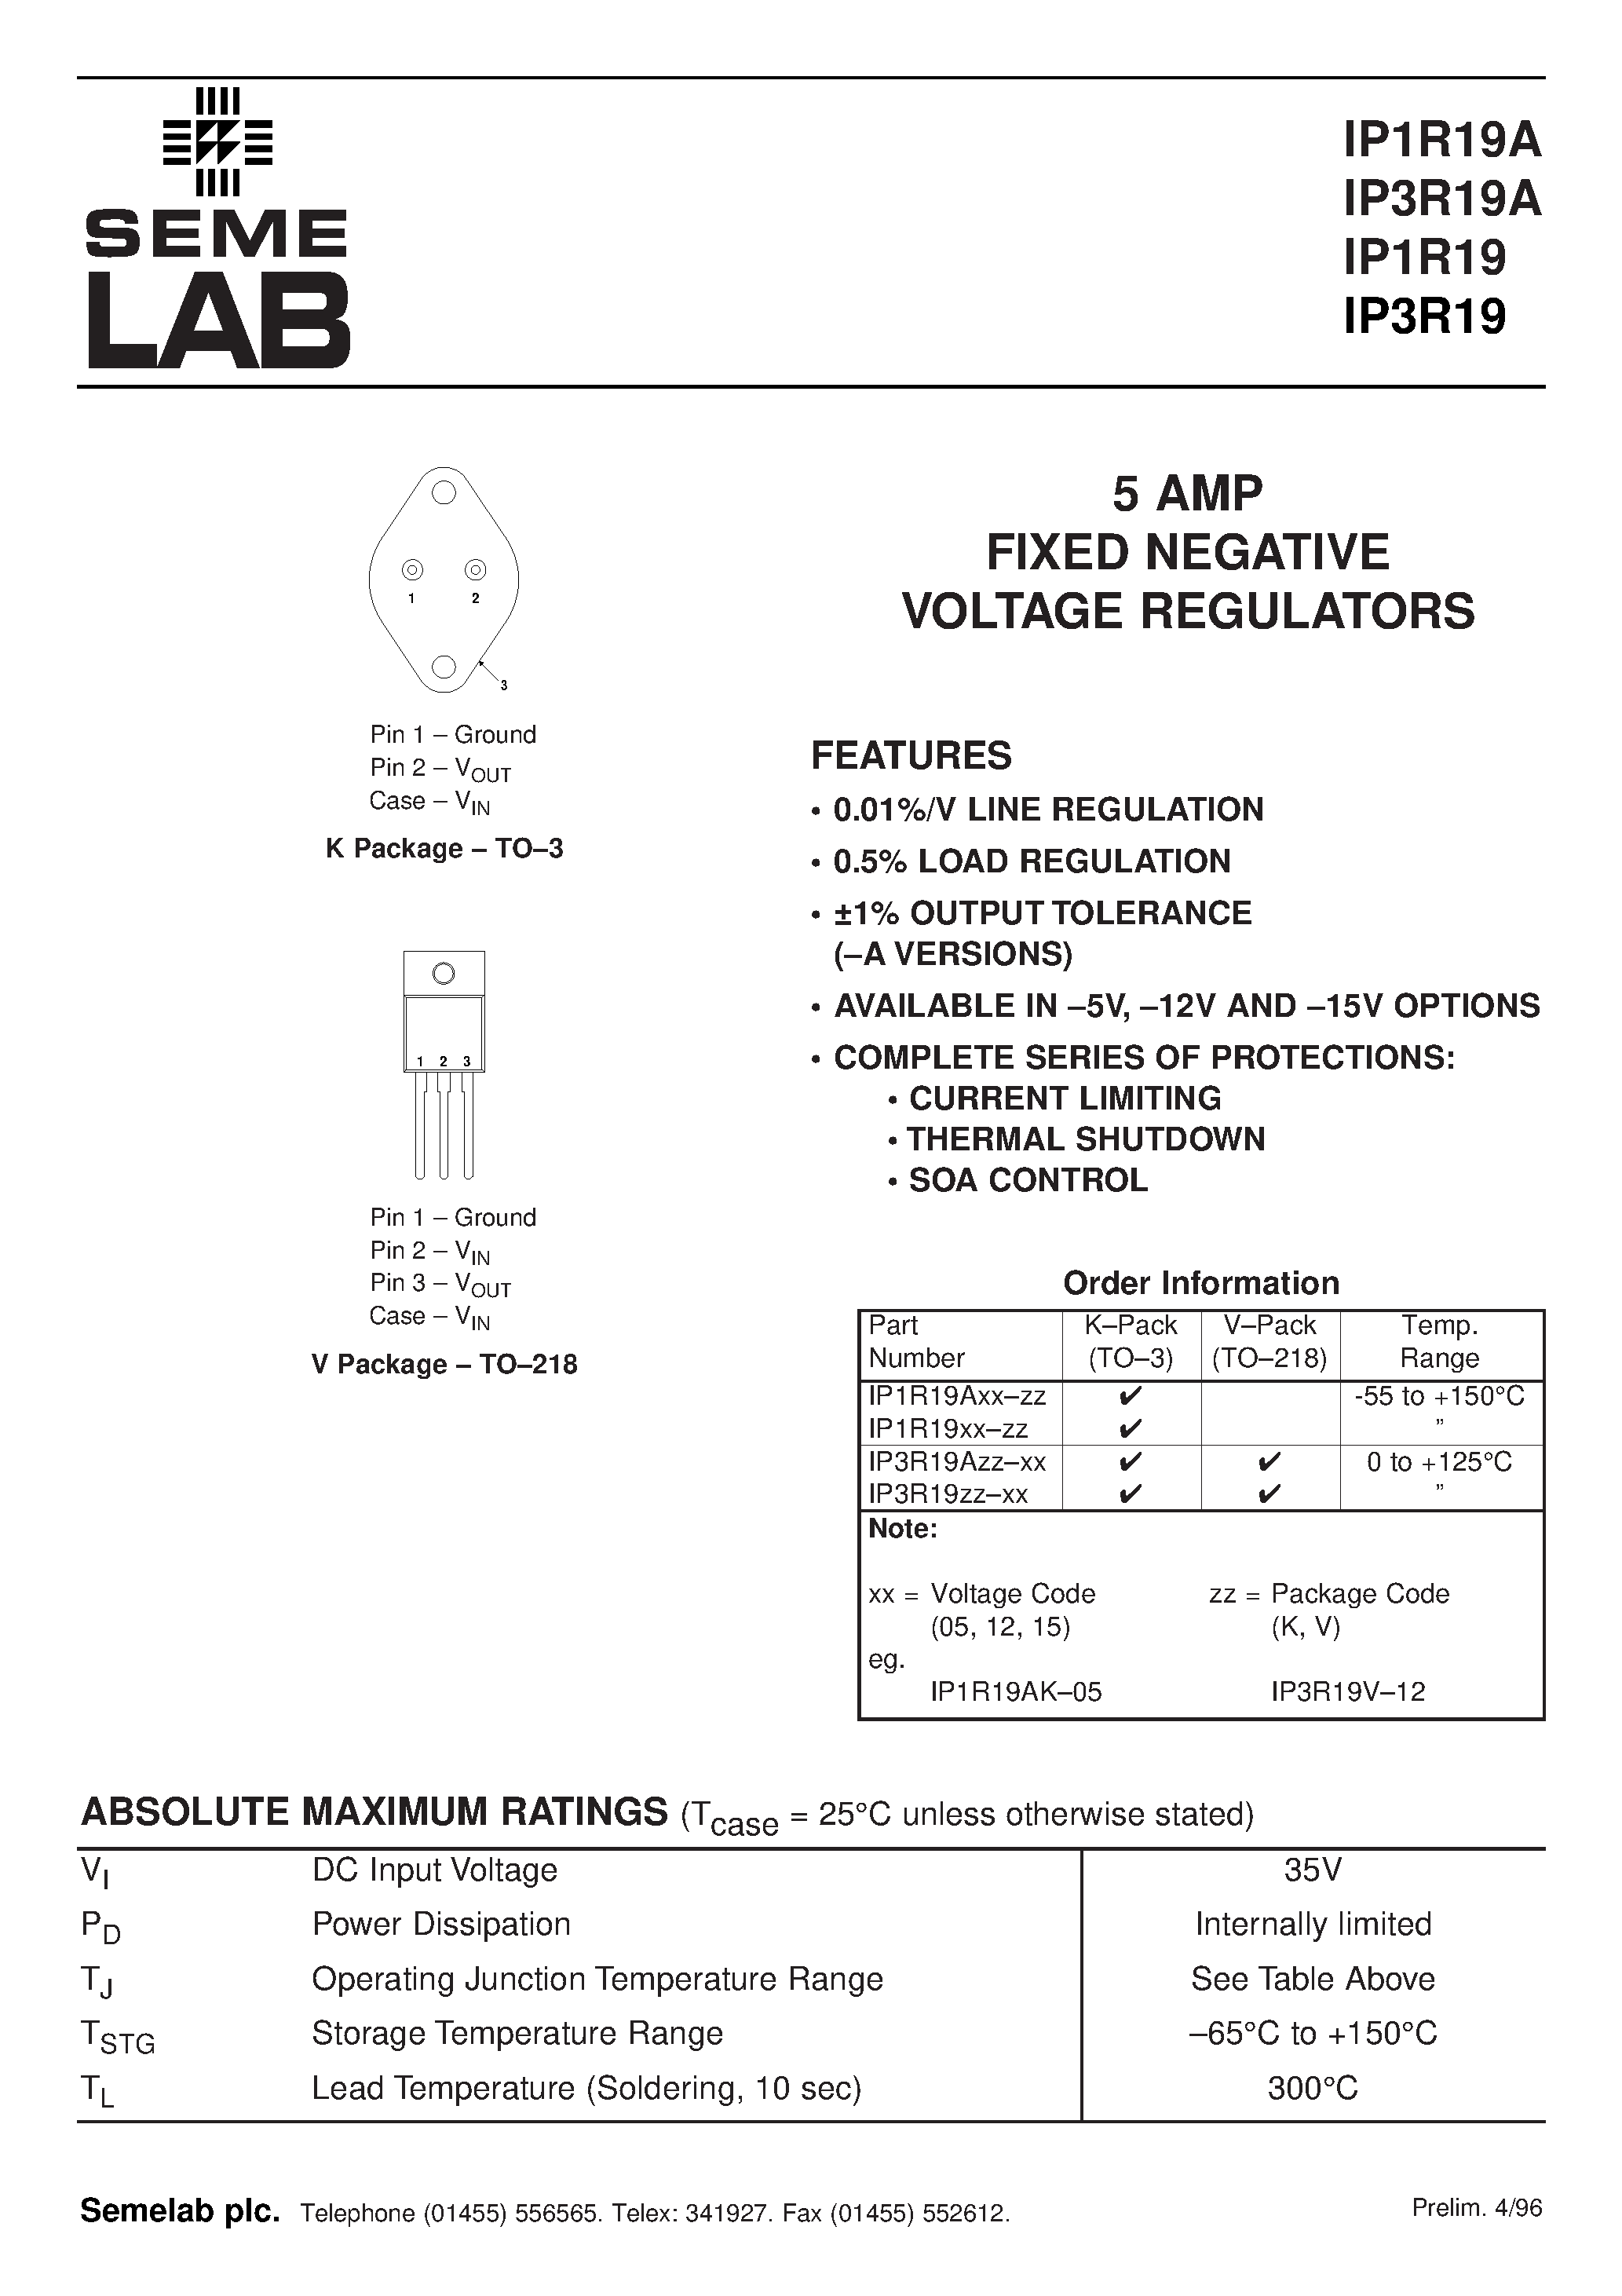 Datasheet IP1R19A05-V - 5 AMP FIXED NEGATIVE VOLTAGE REGULATORS page 1